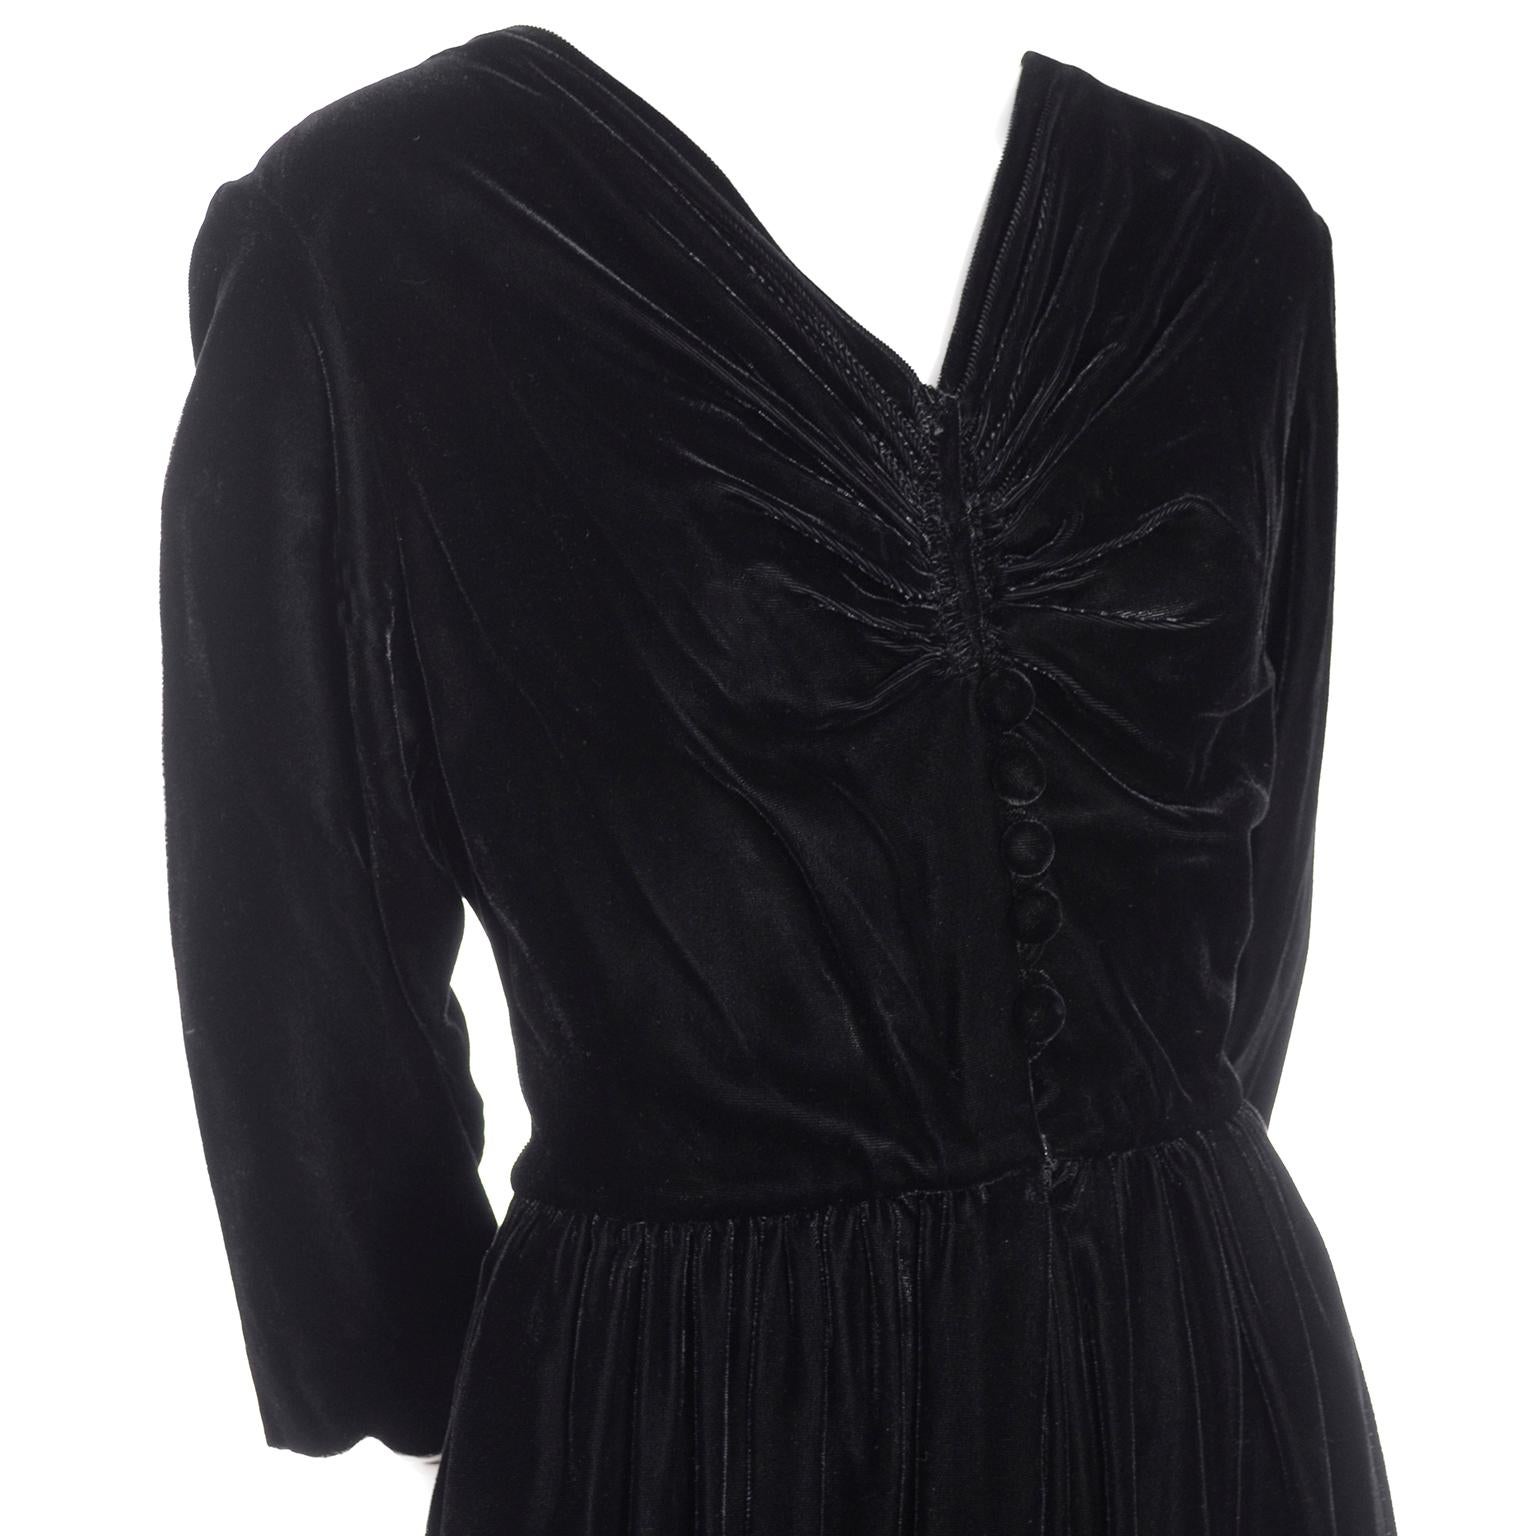 Vintage 1940s Black Velvet Evening Dress or Hostess Gown For Sale 4